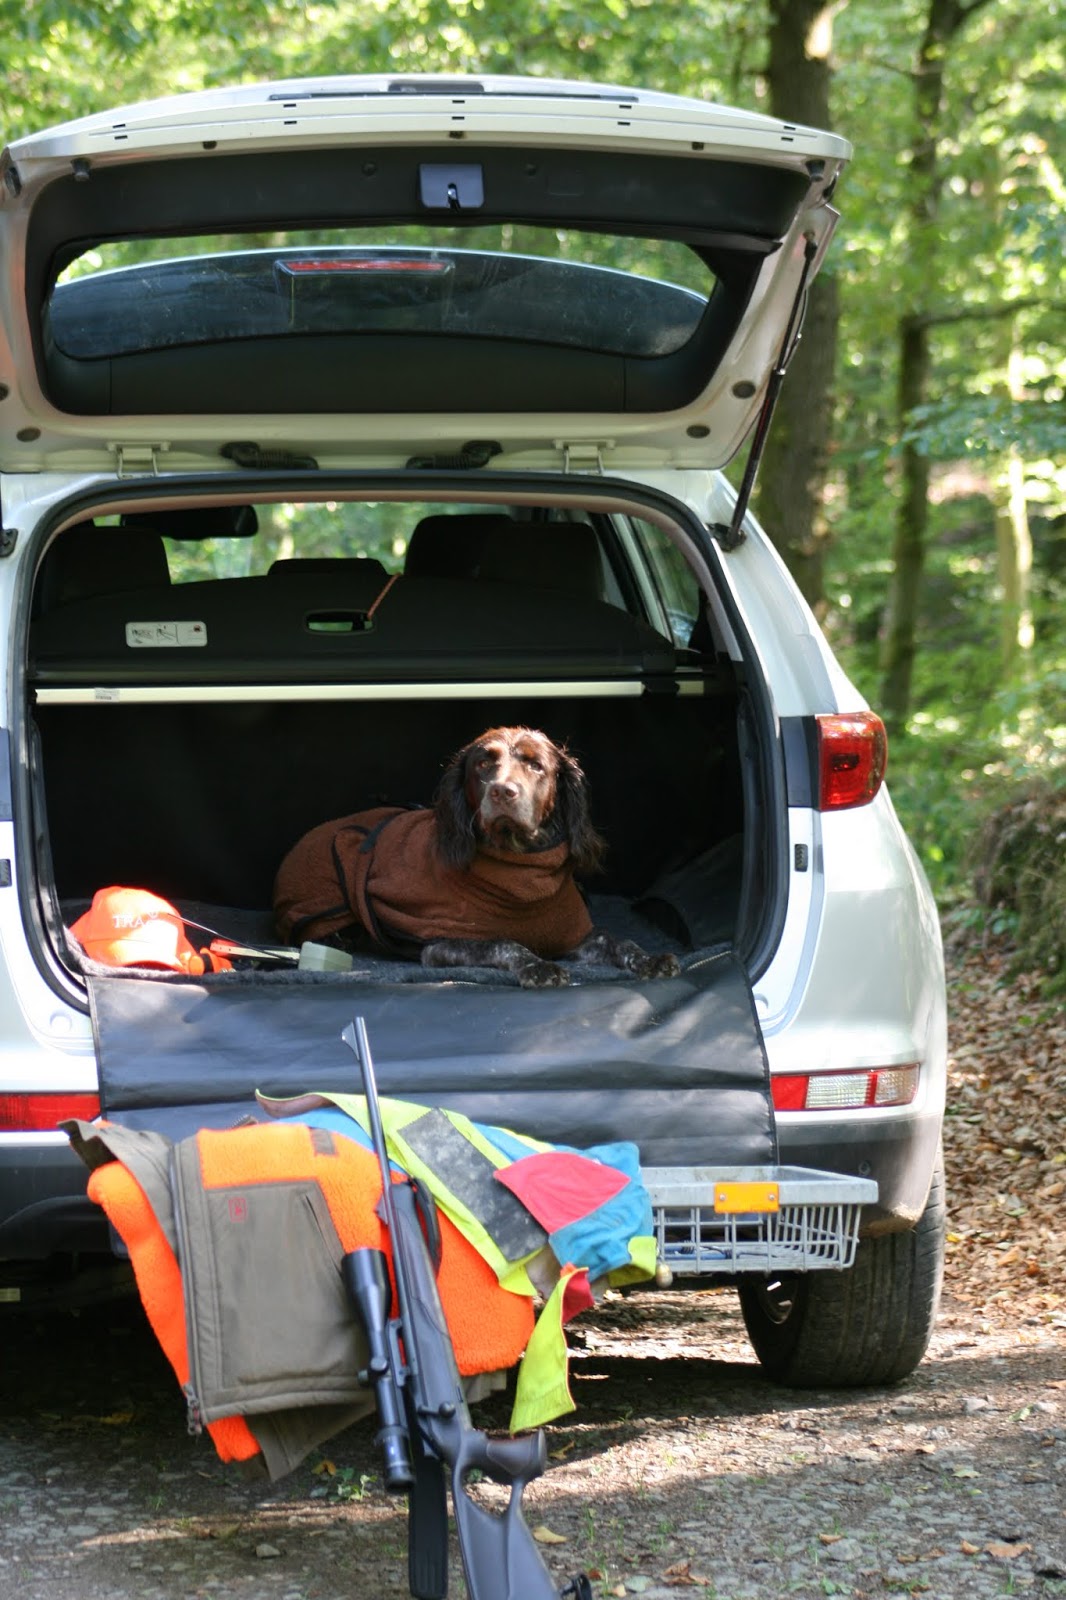 Janas Jagdblog: Hatchbag Kofferraumschutz